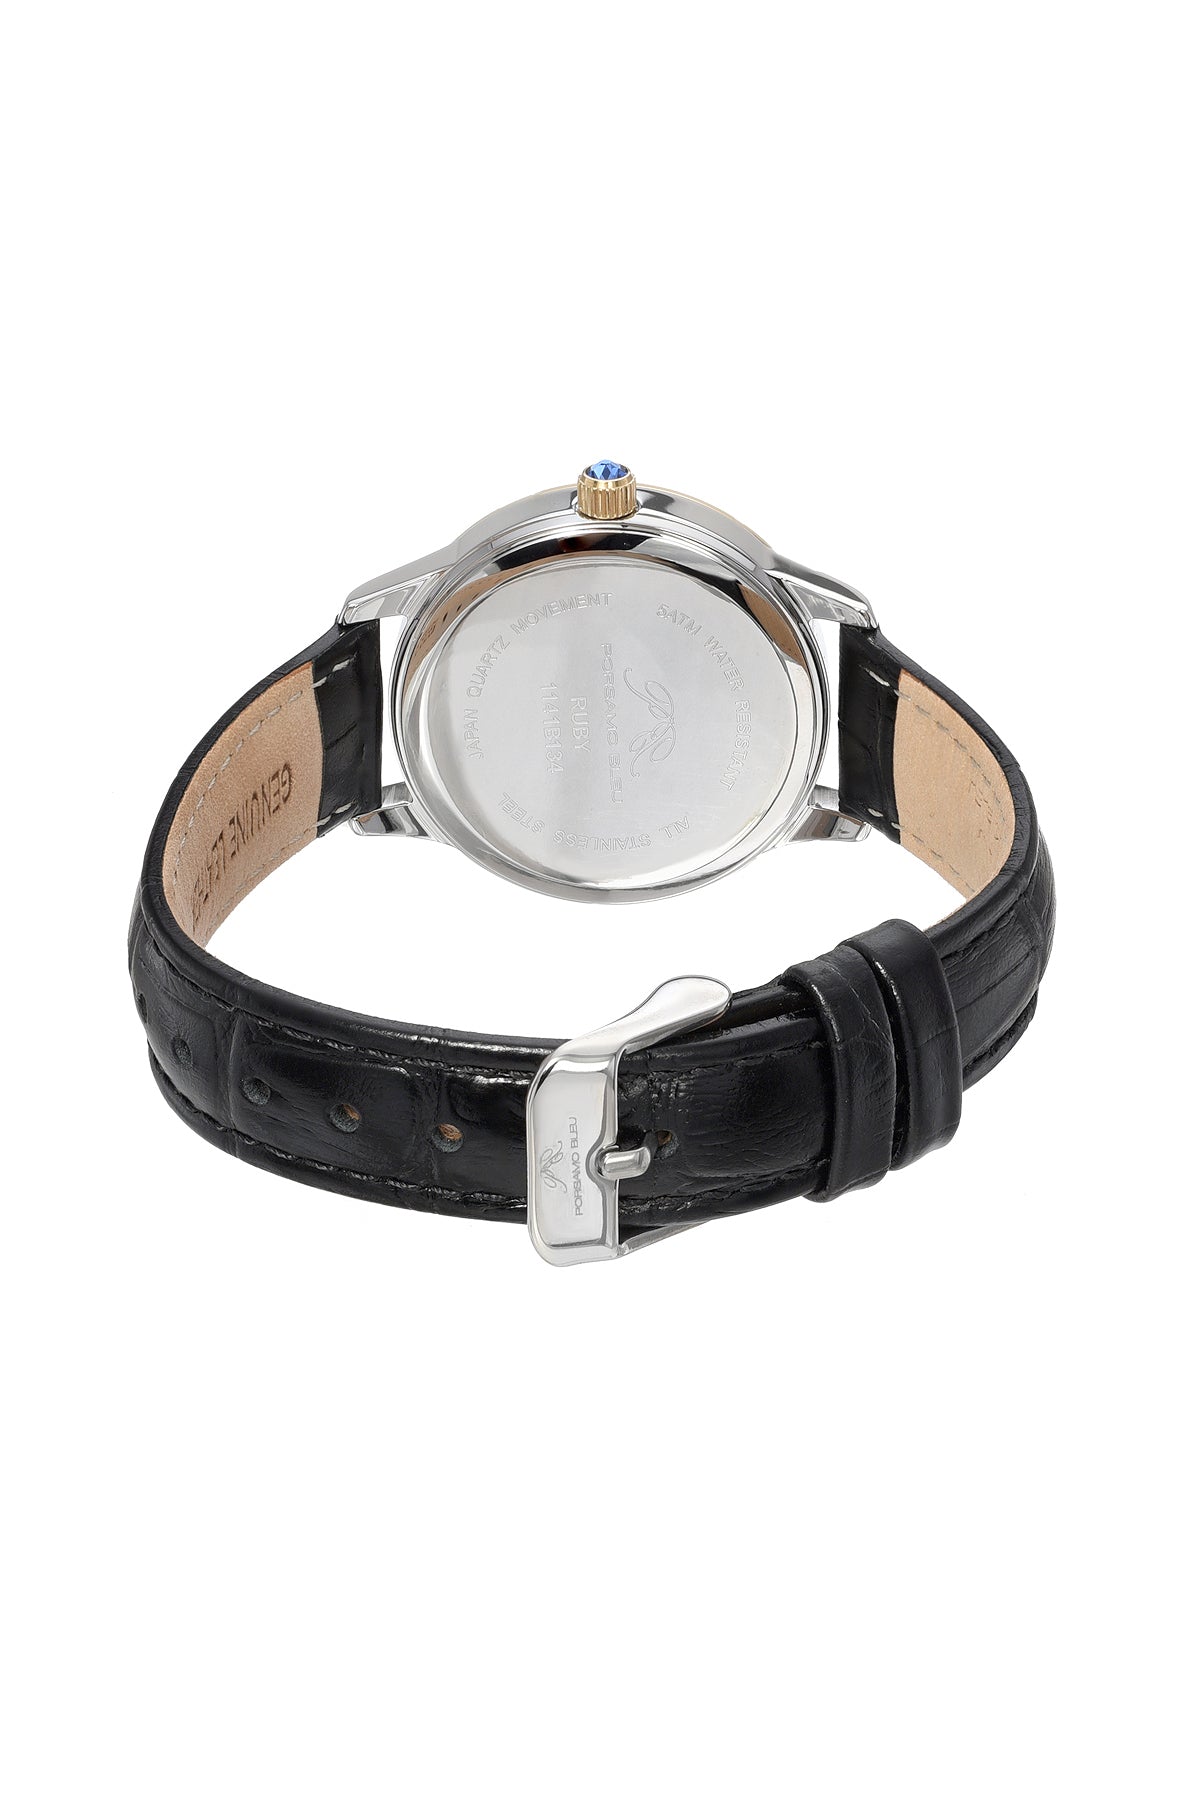 Porsamo Bleu Ruby Luxury Women's Genuine Leather Band Watch, Gold, Black 1141BRUL